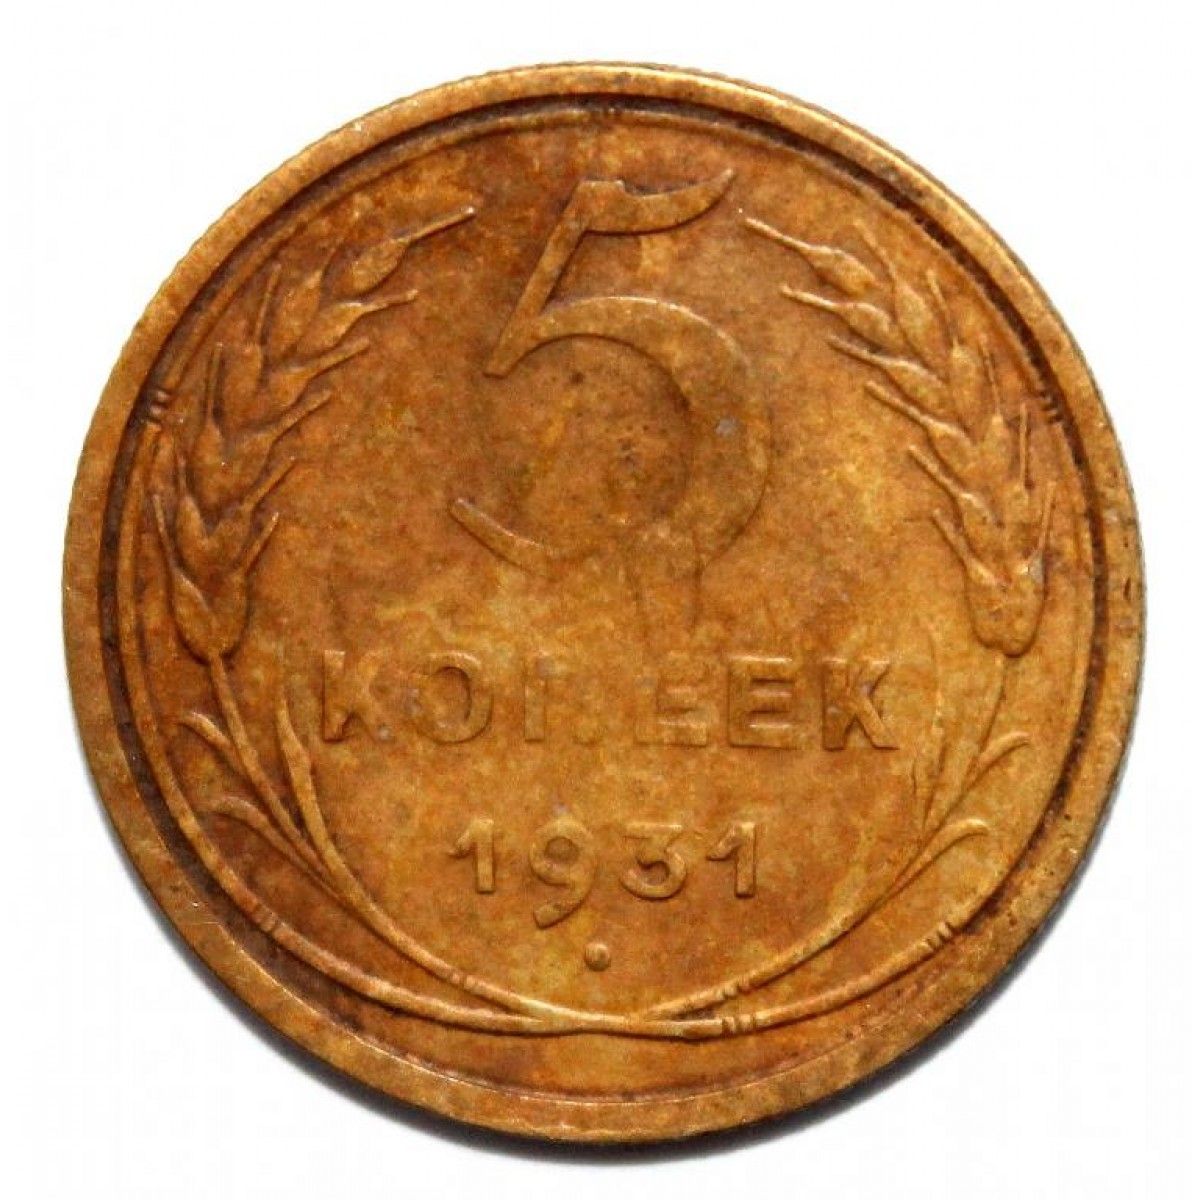 3 копейки 1931 цены. 5 Копеек 1931. Монета СССР 5 копеек 1930 года. 3 Копейки 1955 f. Пирожки советские по 5 копеек.